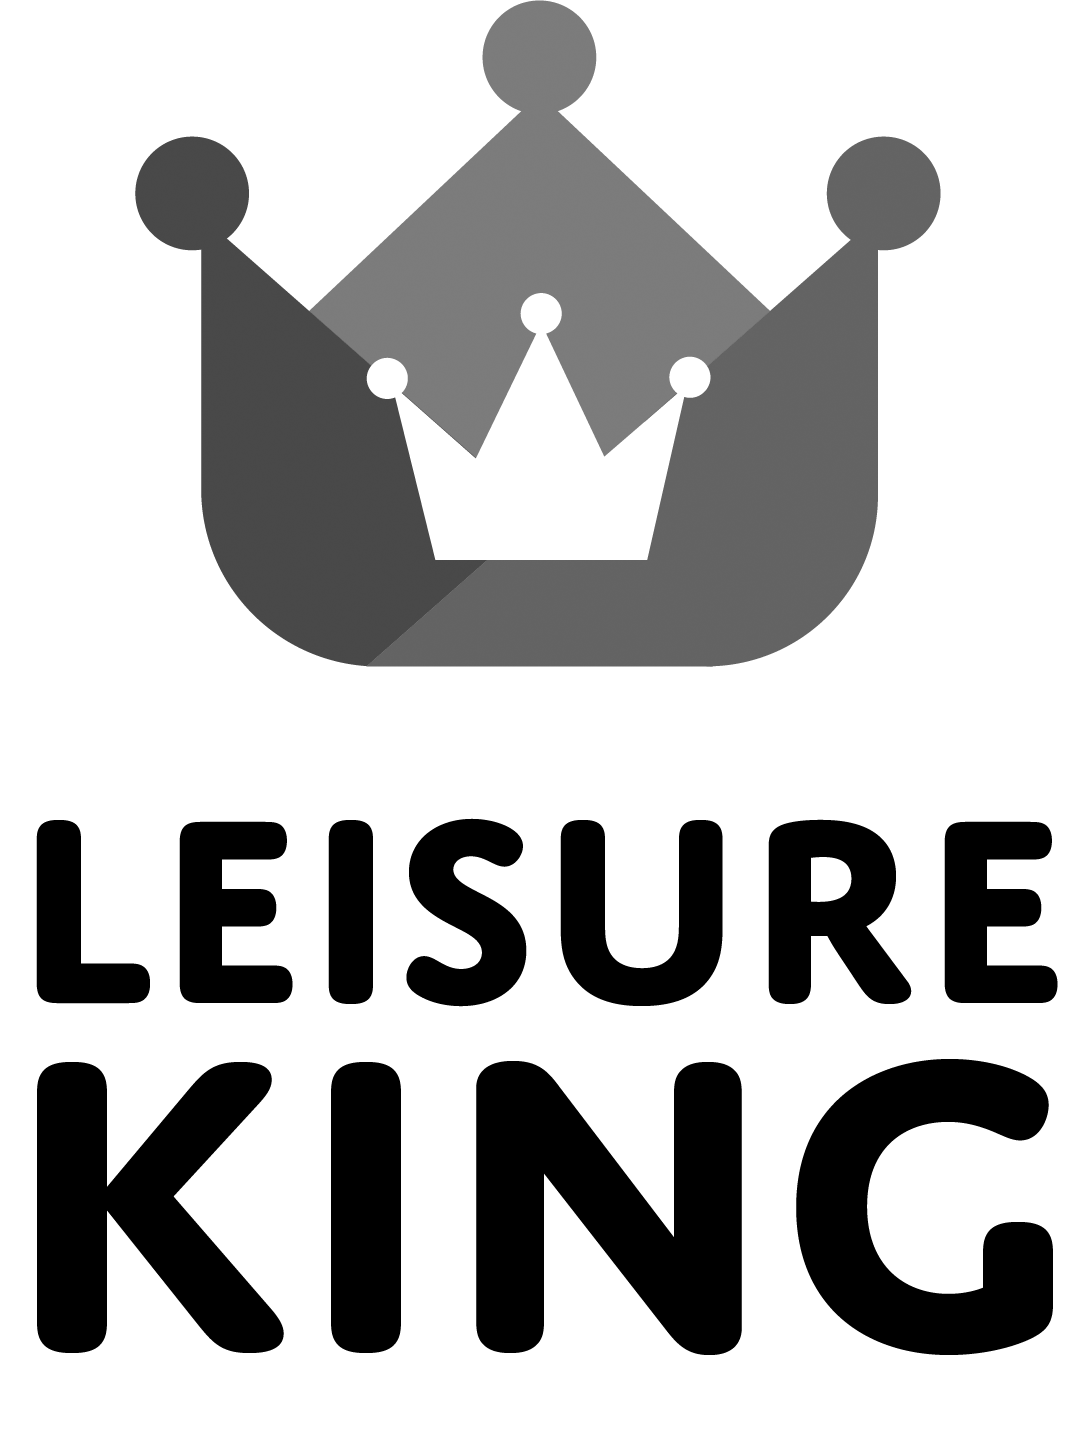 LeisureKing_Logo_ZW